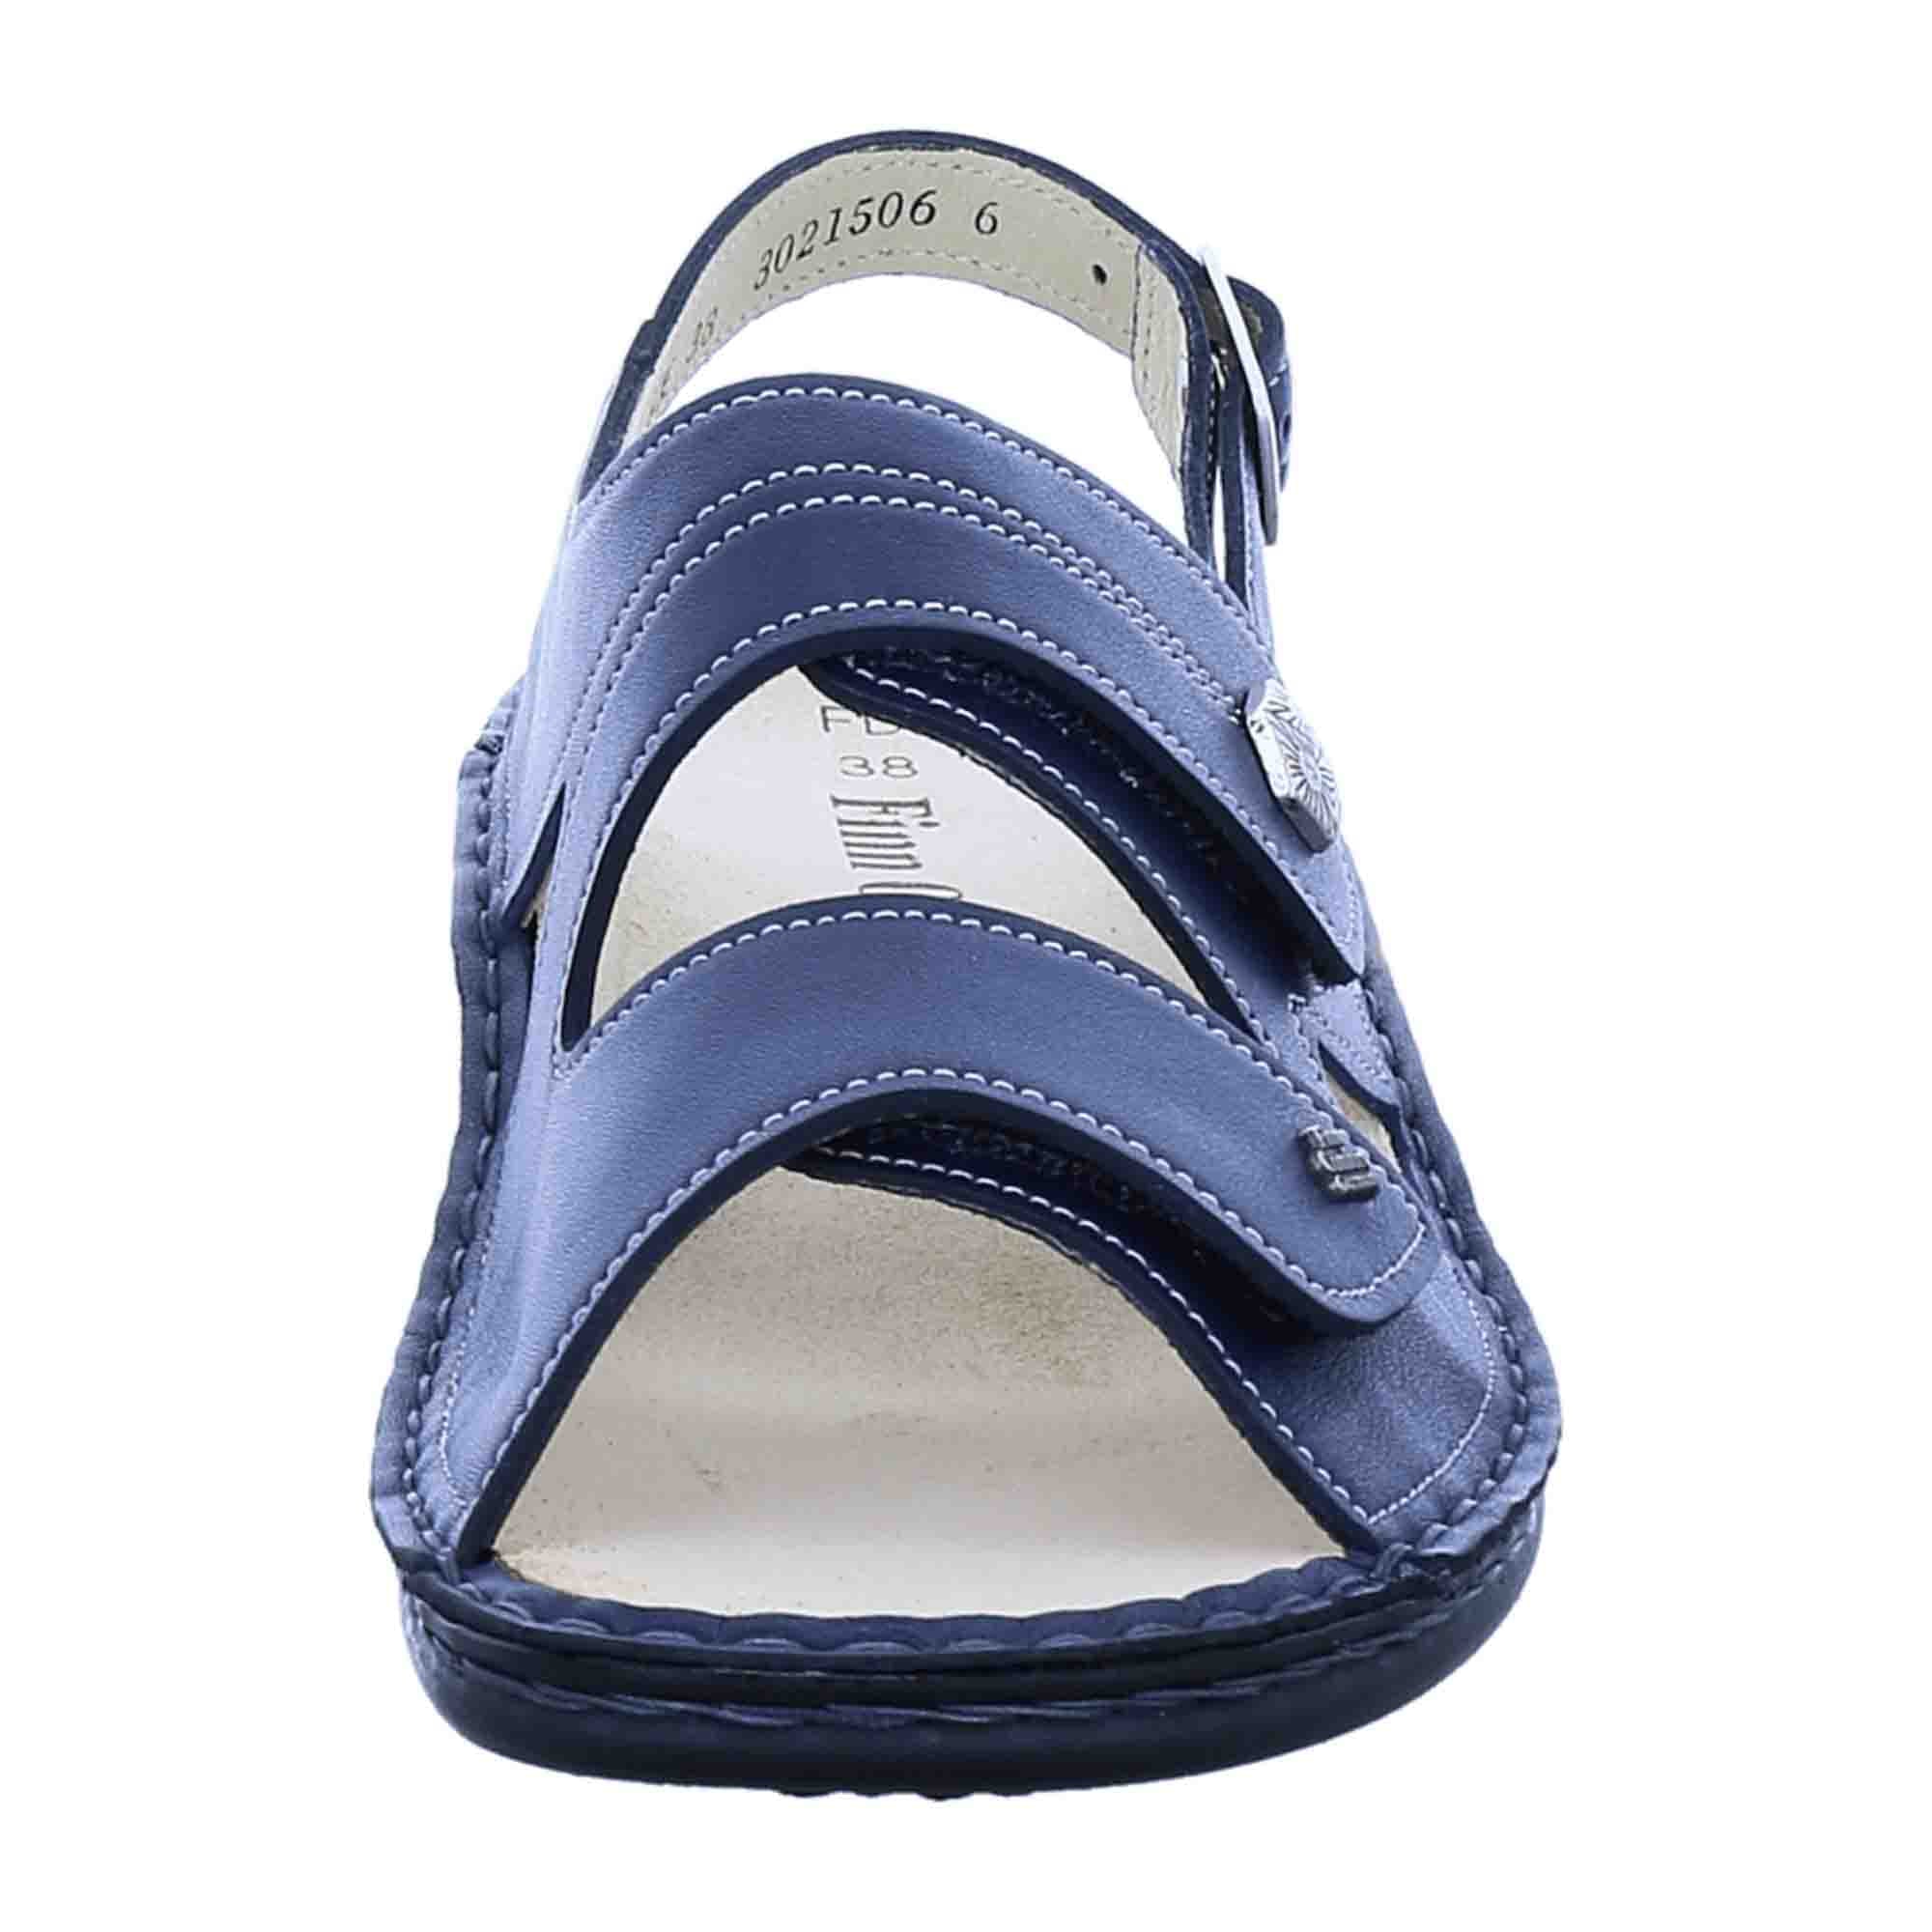 Finn Comfort Milos Sandals for Women - Stylish & Comfortable Blue Leather Sandals